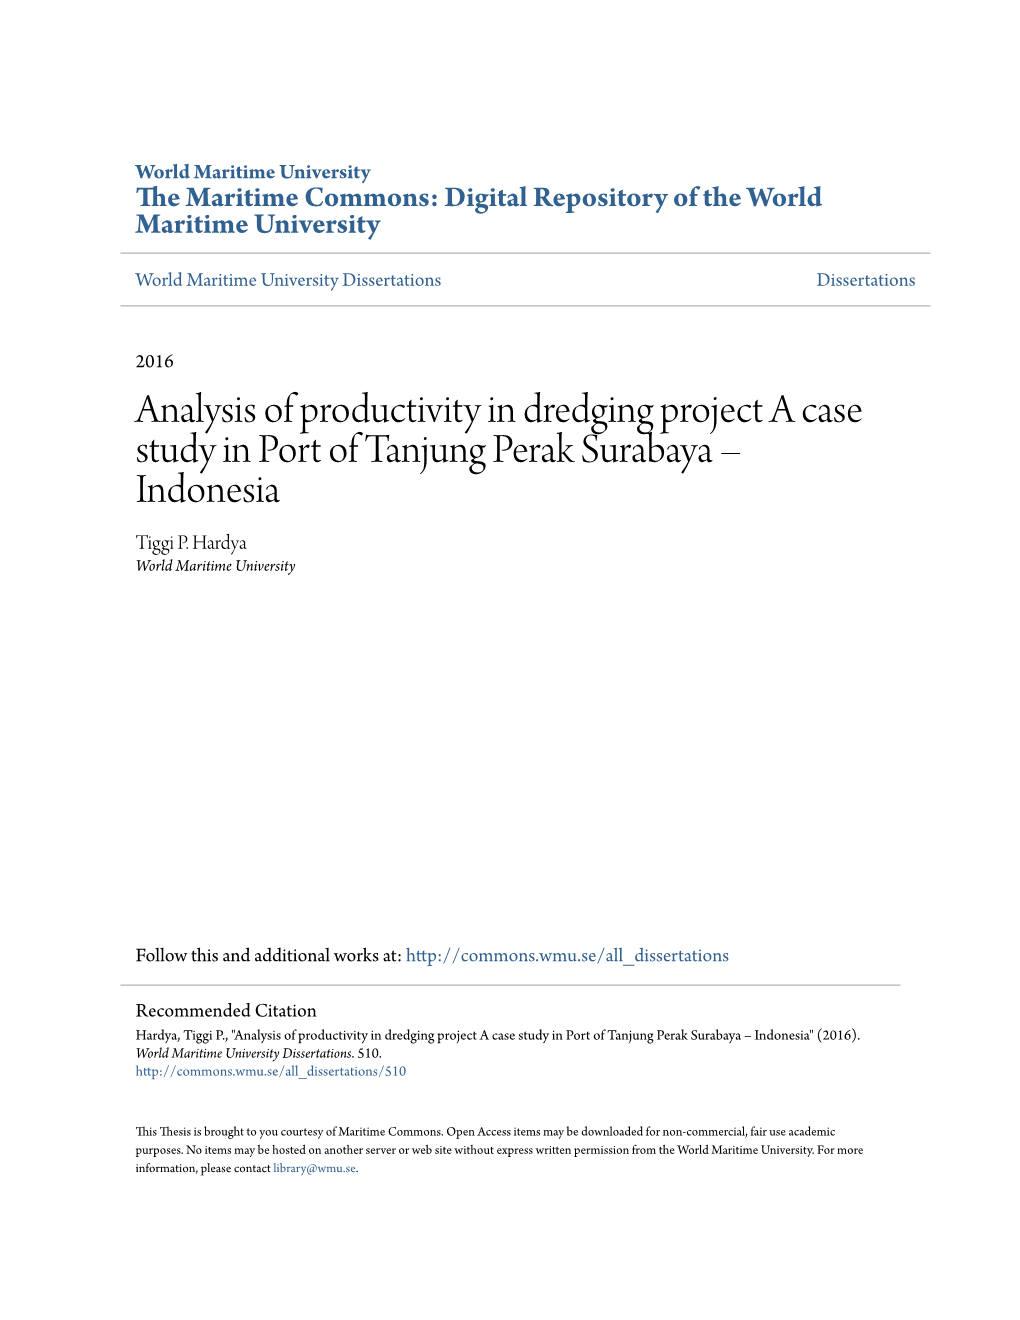 Analysis of Productivity in Dredging Project a Case Study in Port of Tanjung Perak Surabaya – Indonesia Tiggi P